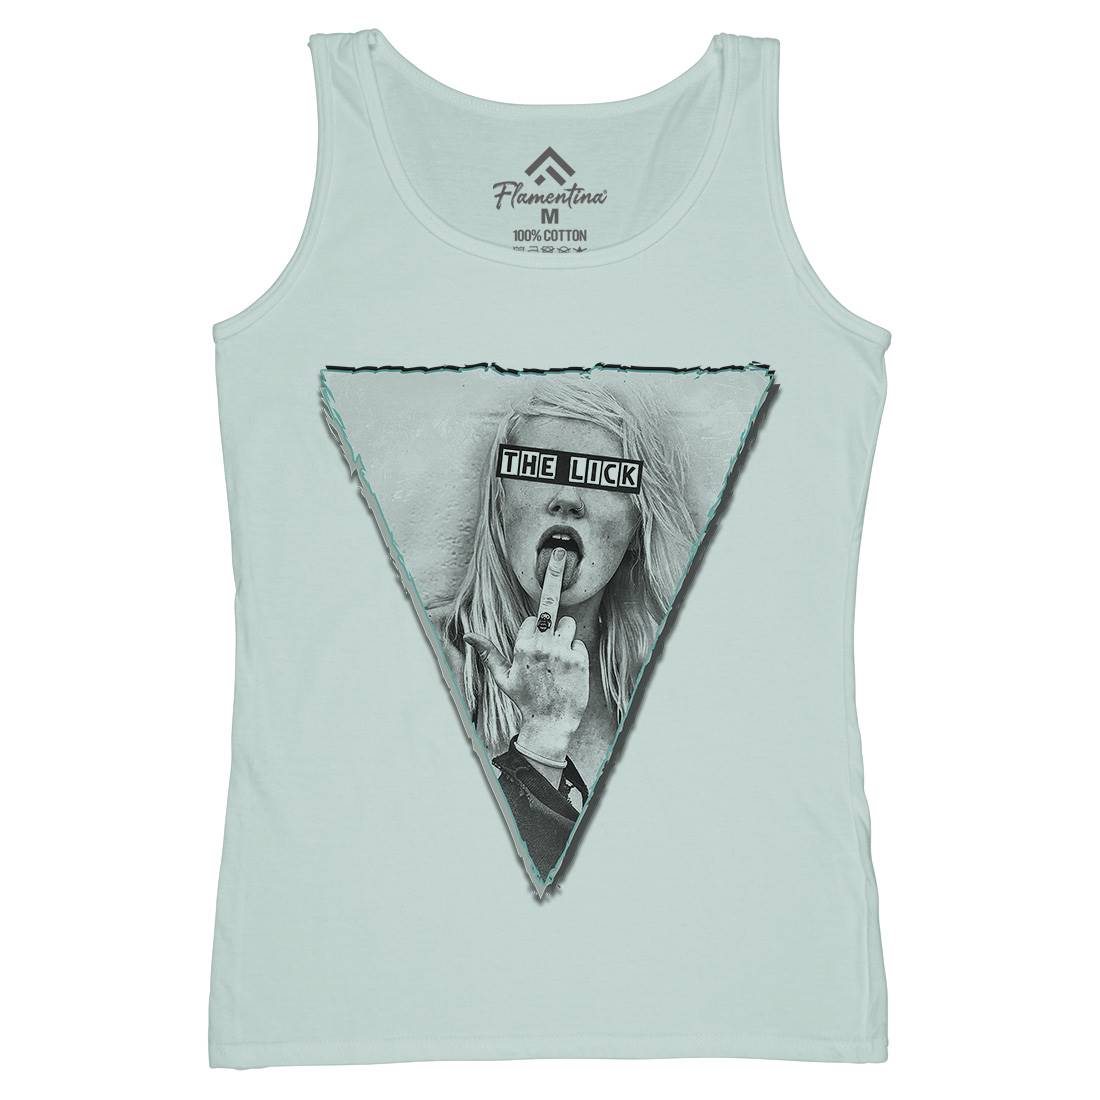 The Lick Womens Organic Tank Top Vest Art A924